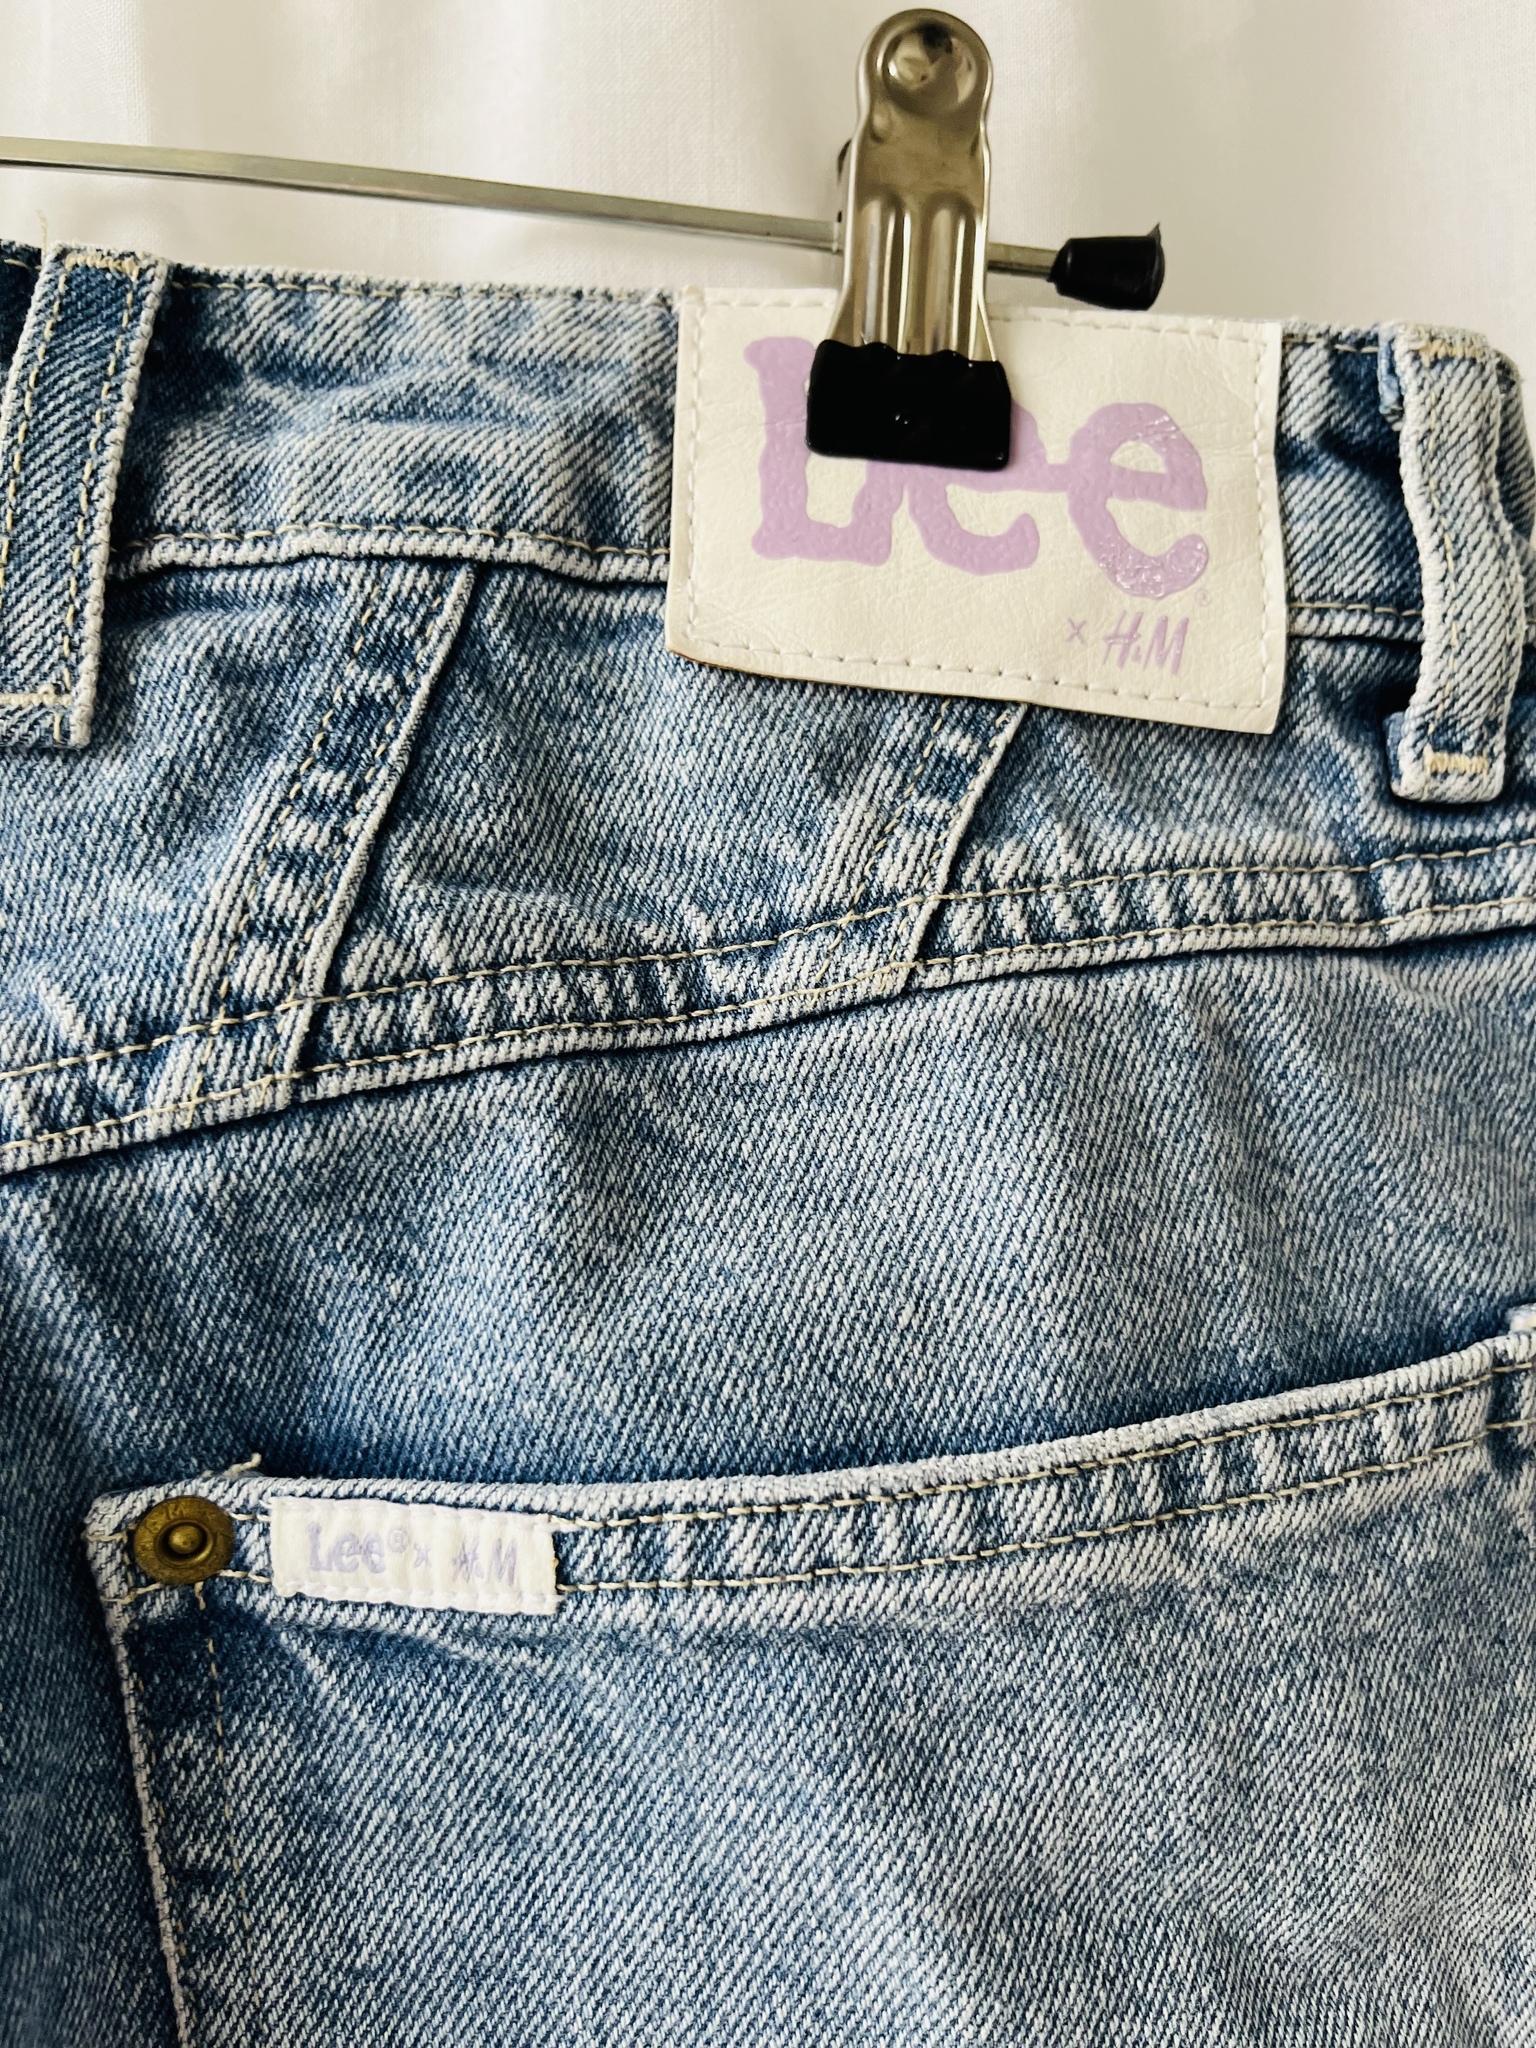 Lee x H&M loose fit mom jeans